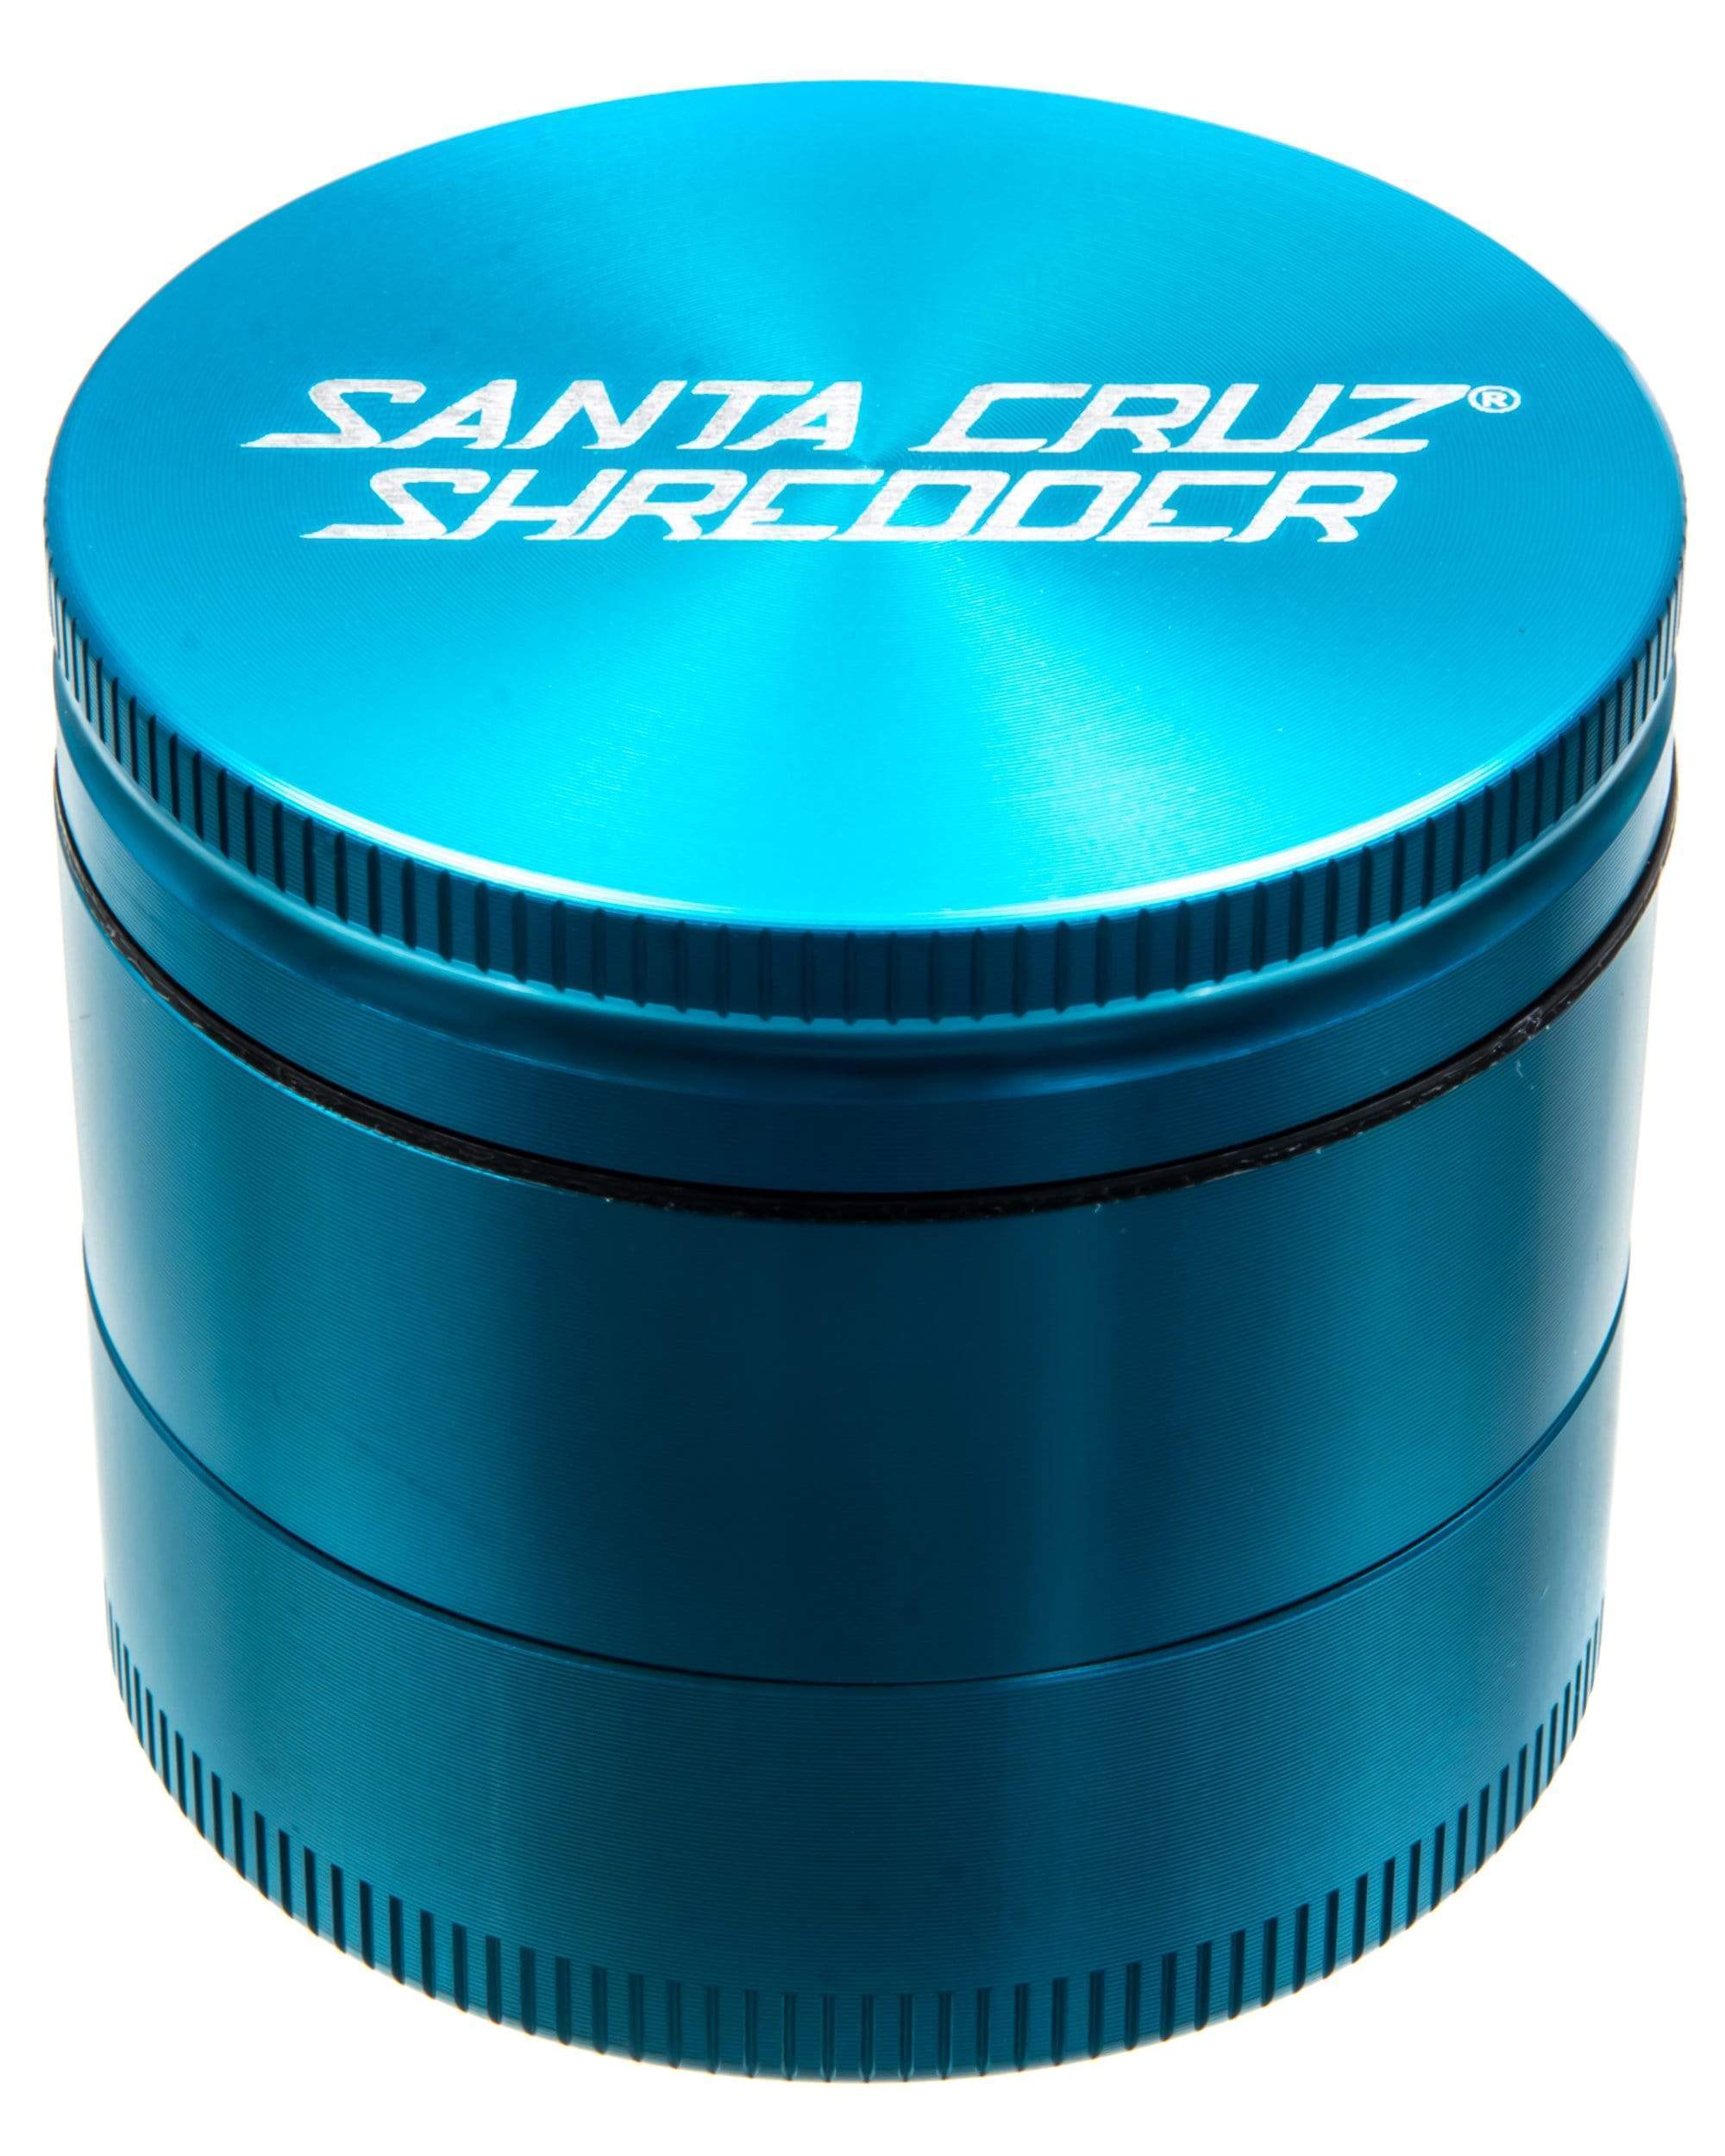 Santa Cruz Shredder grinder